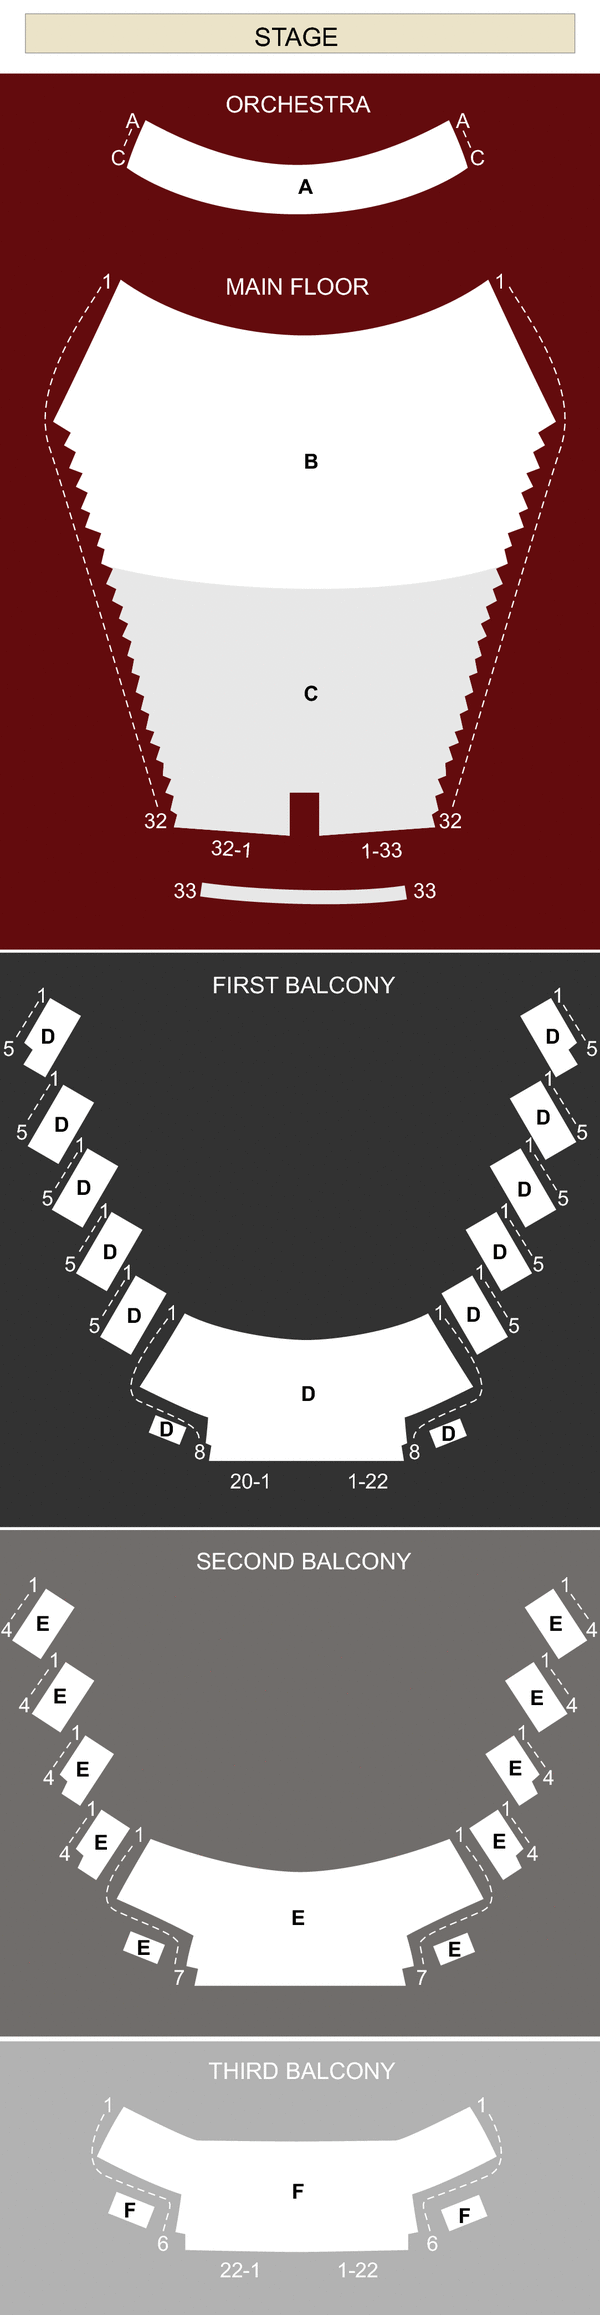 Stephens Auditorium Seating Chart